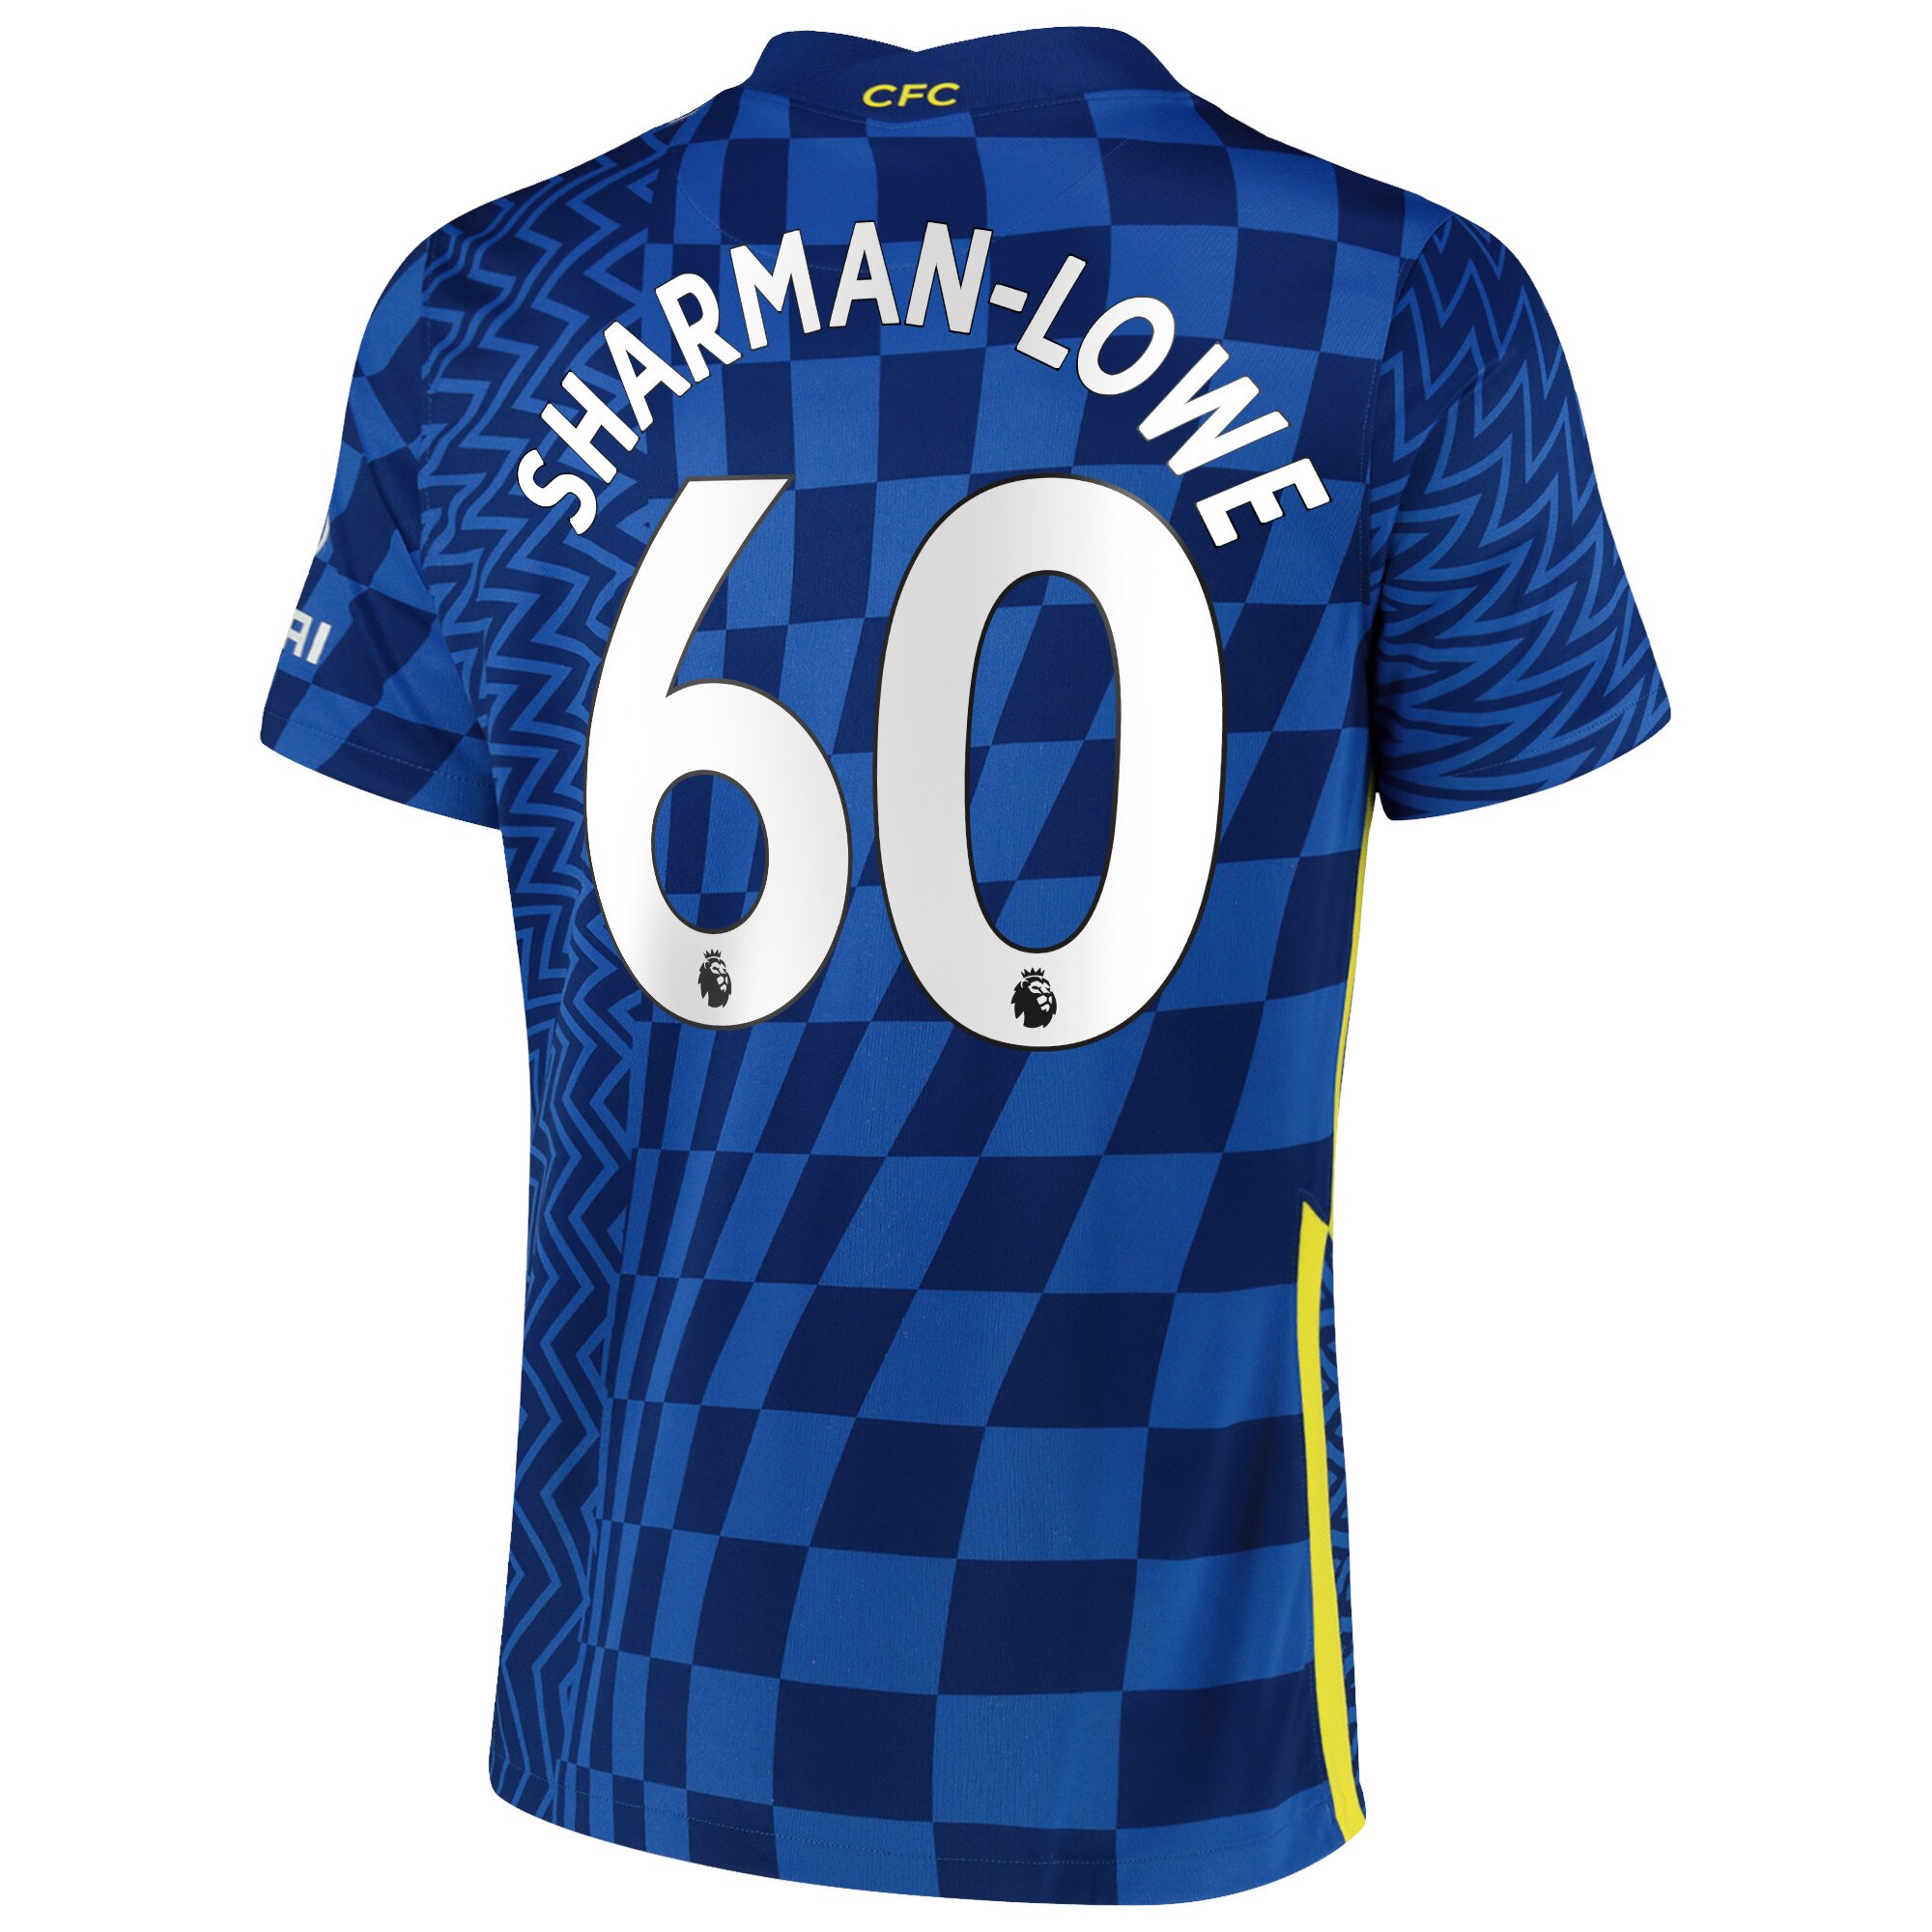 Chelsea Home Stadium Shirt 2021-22 with Sharman-lowe 60 printing